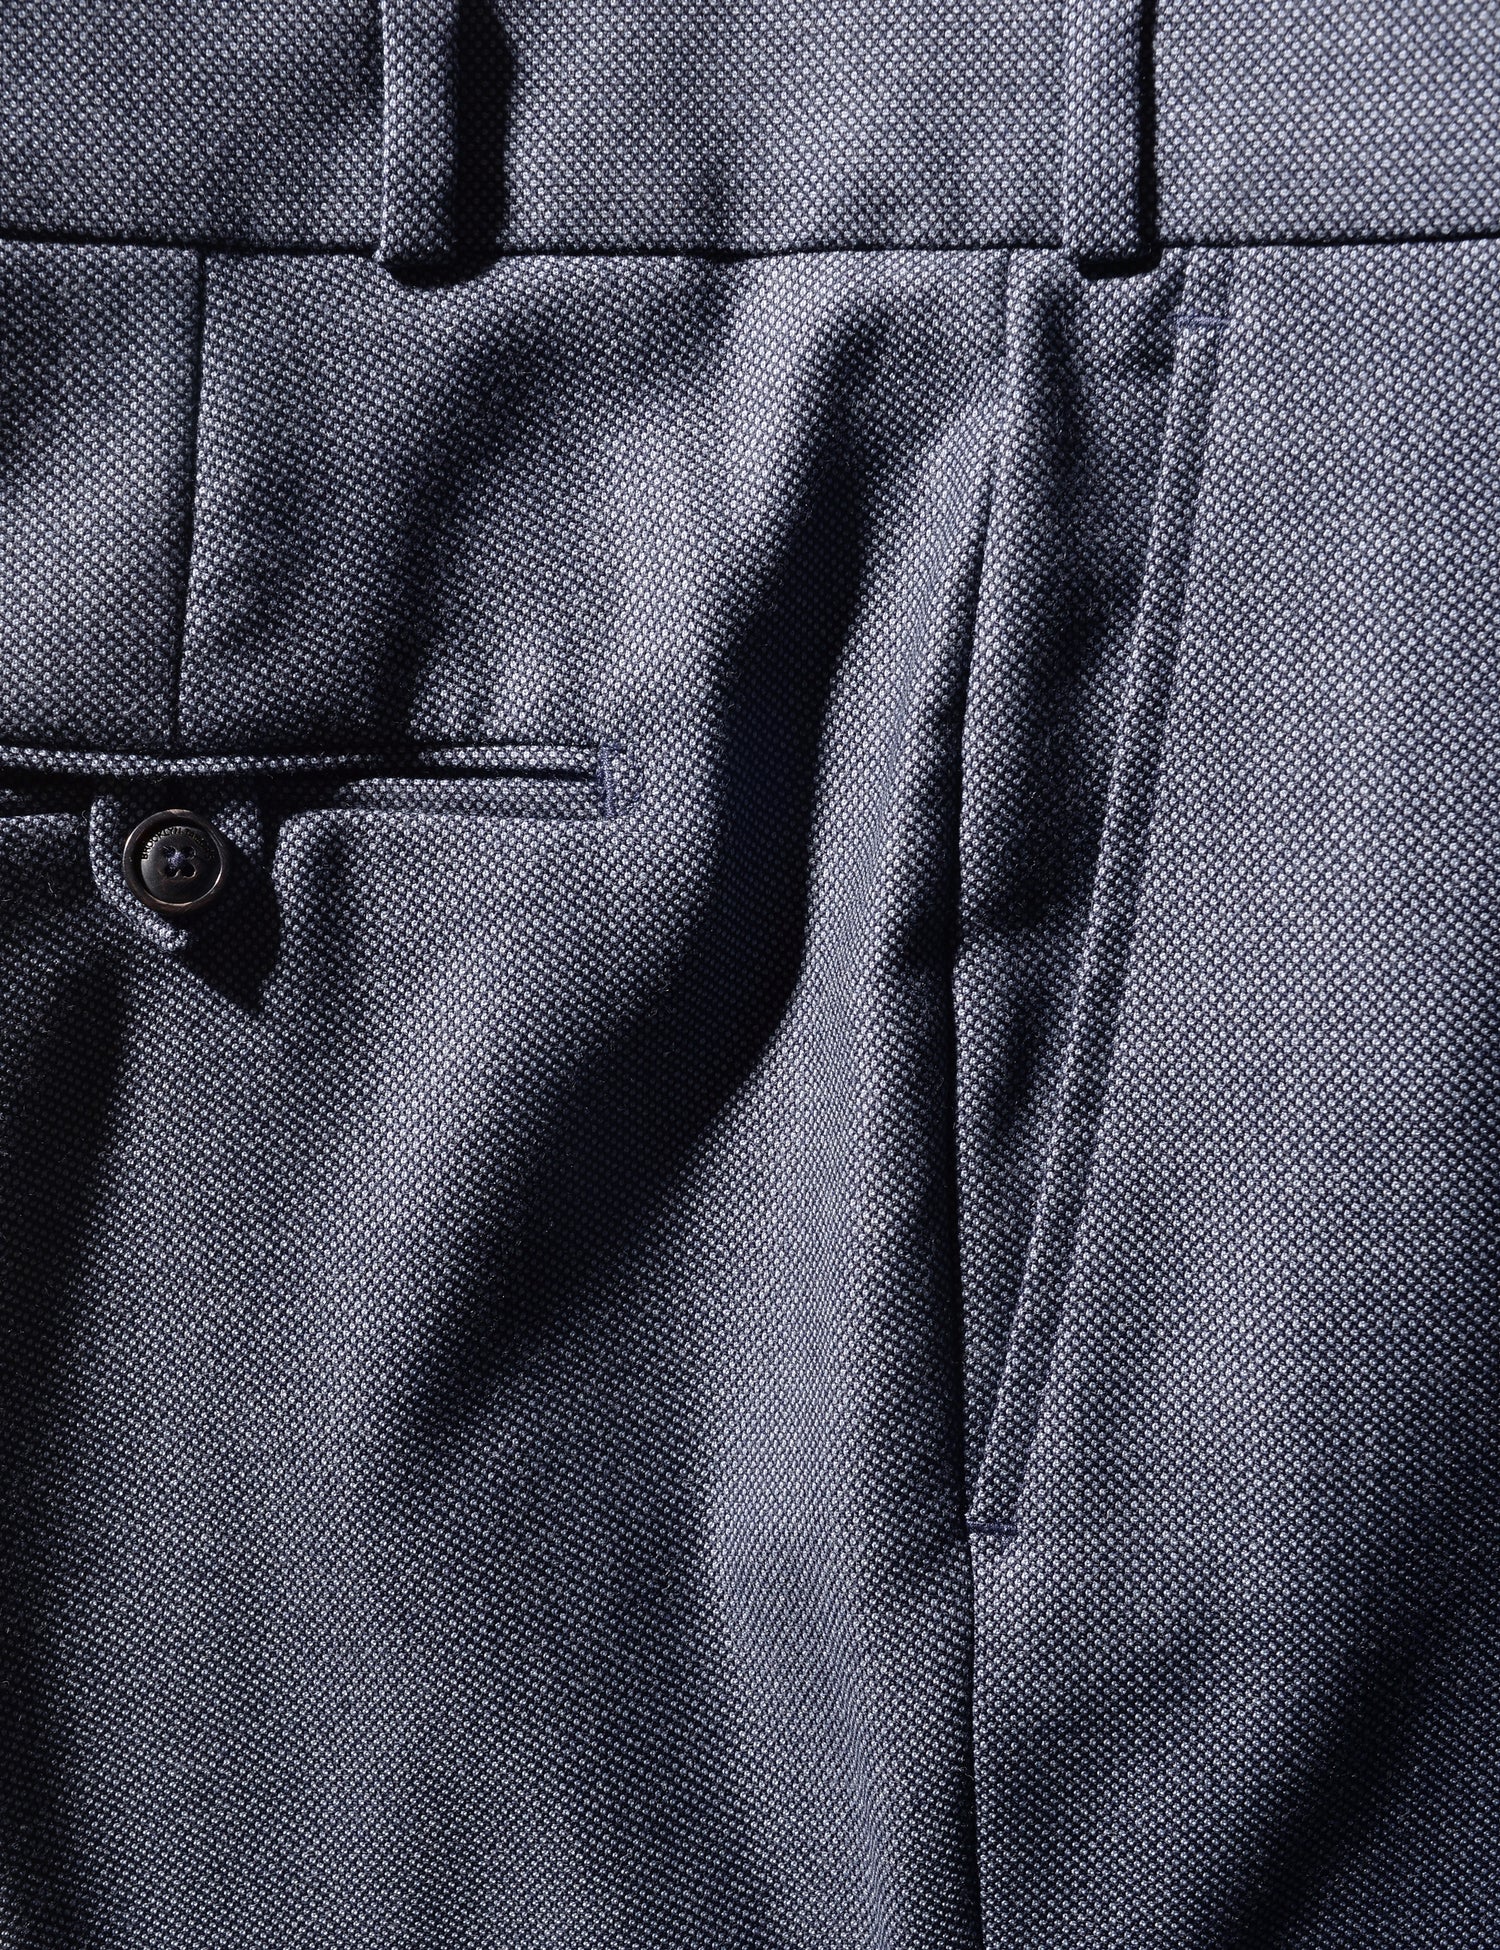 Detail shot of Brooklyn Tailors BKT50 Tailored Trousers in Birdseye Weave - Steel Blue showing back and side pockets